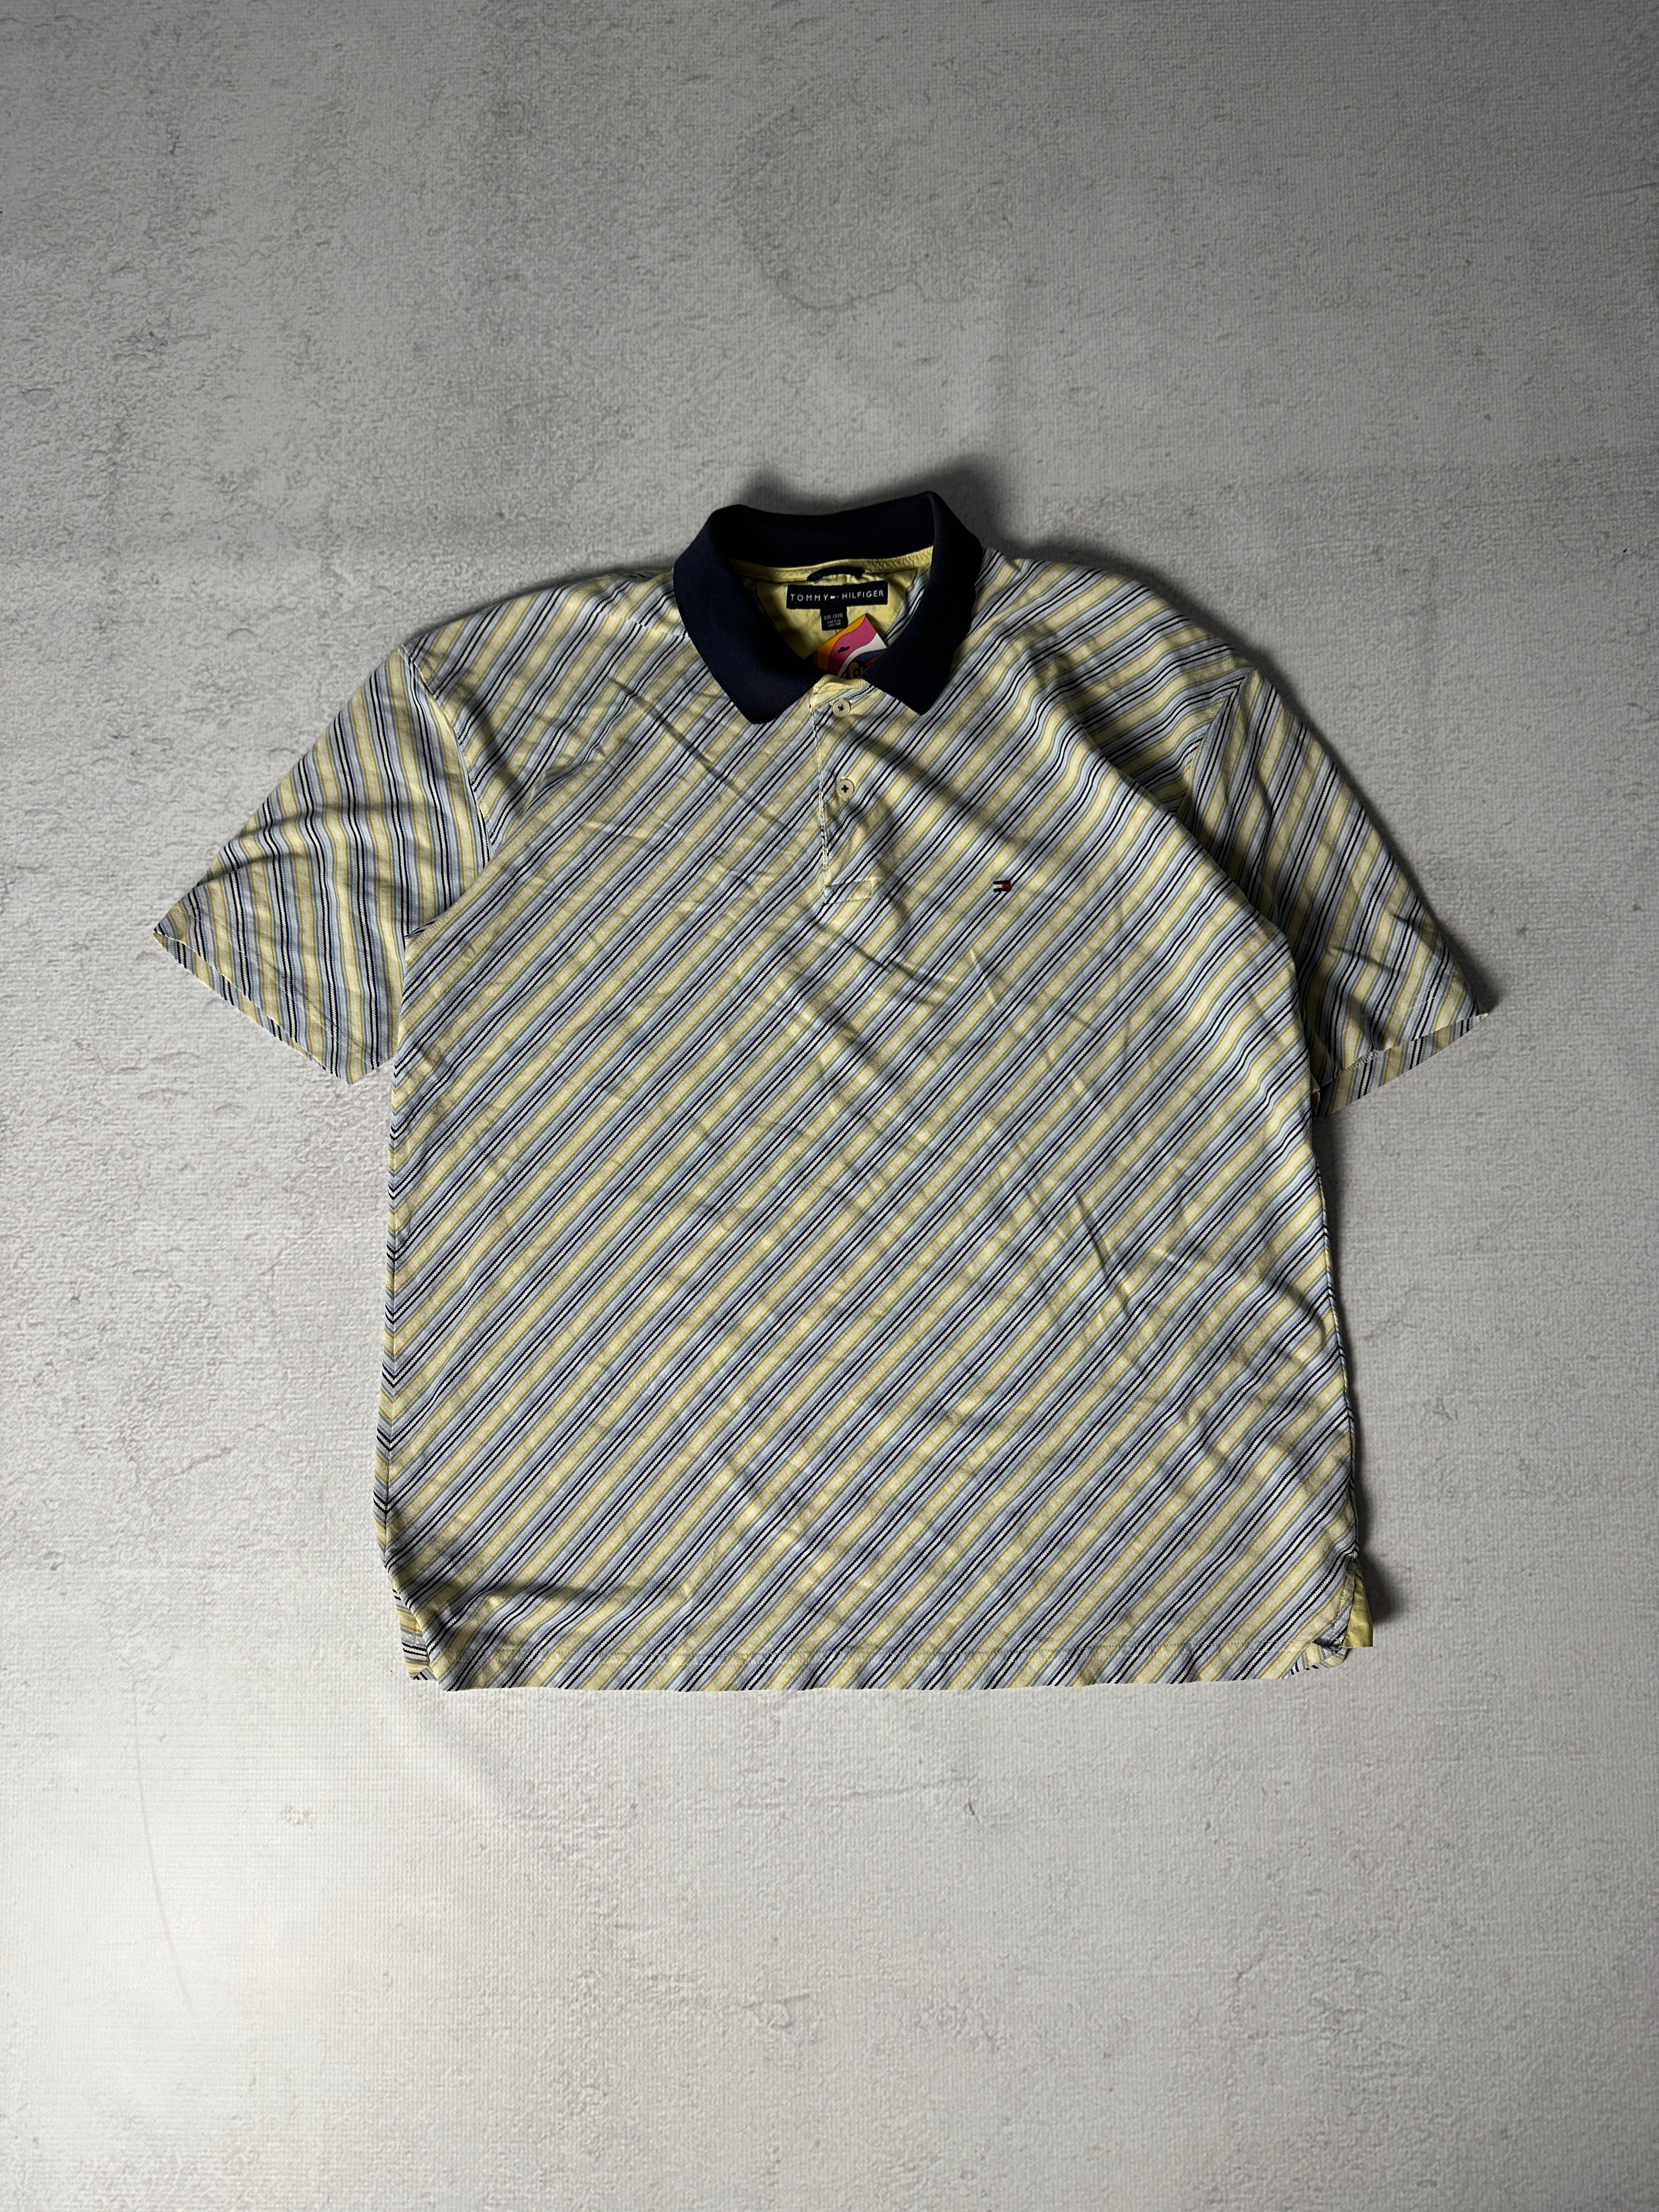 Vintage Tommy Hilfiger Polo Shirt - Men's 2XL